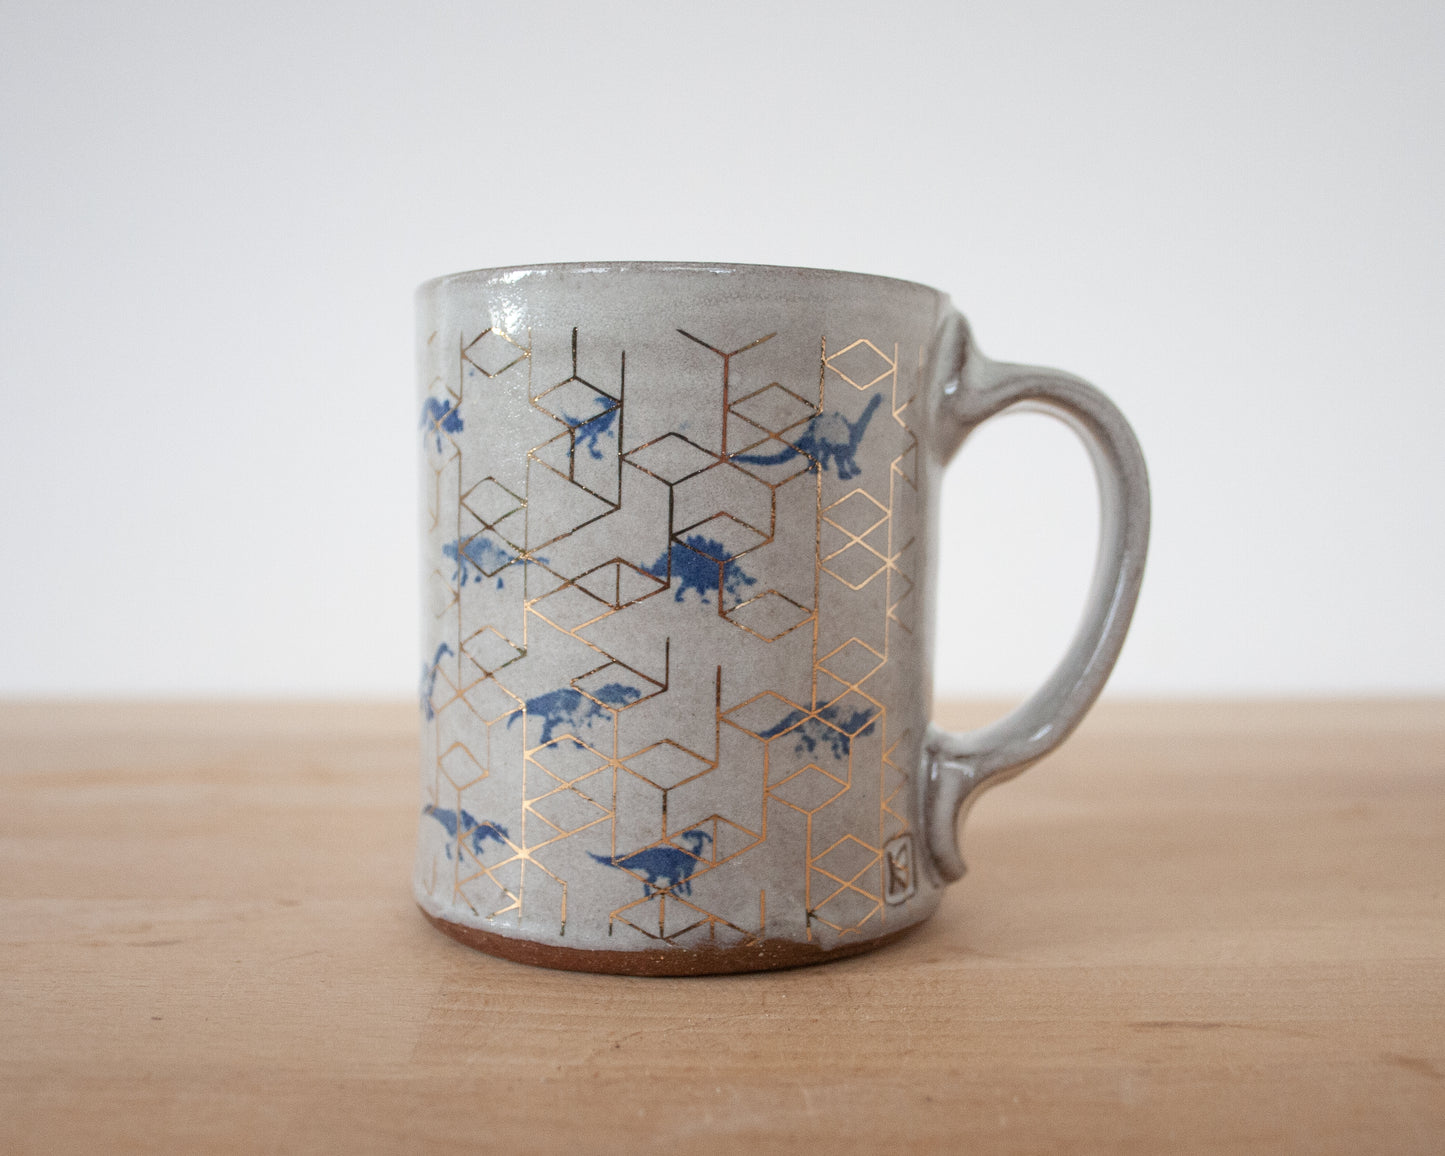 Gold Stegosaurus Mug with small blue dinos